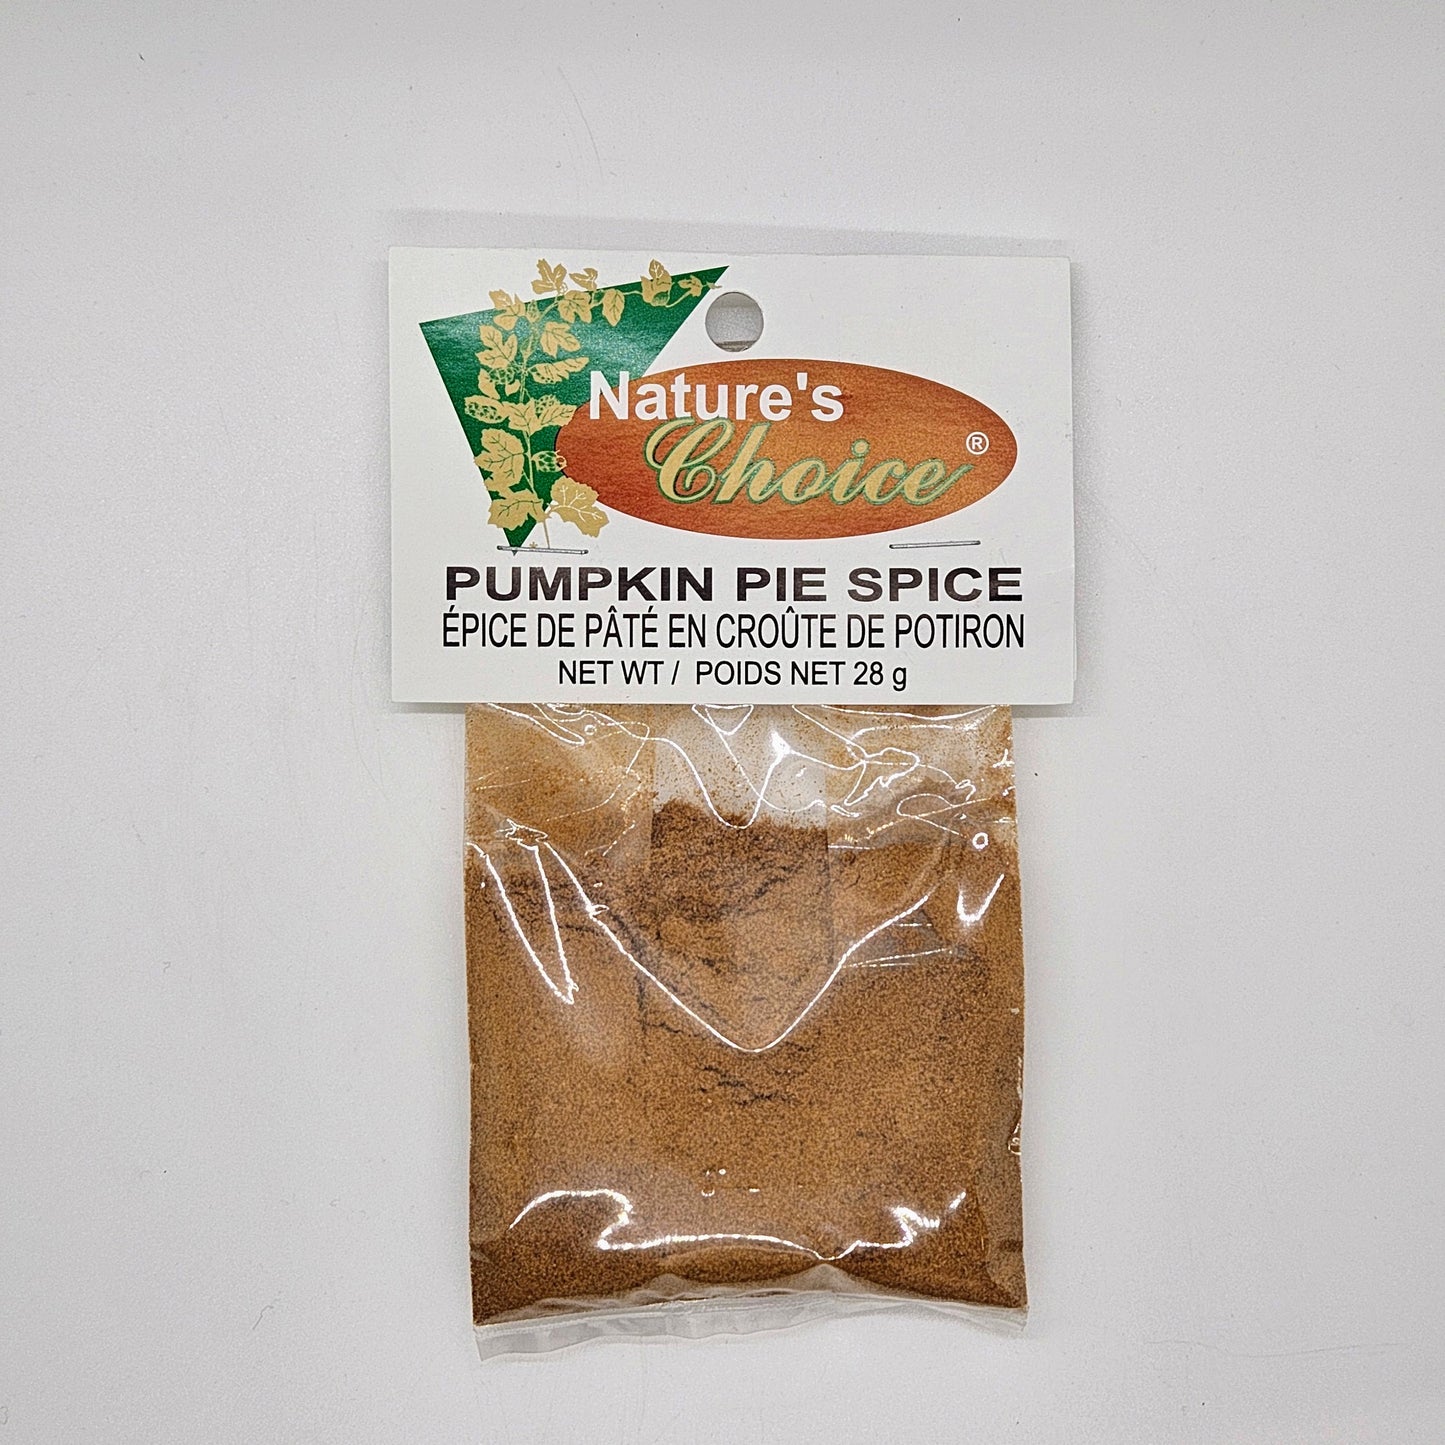 Pumpkin Pie Spice mix (Seasonal)